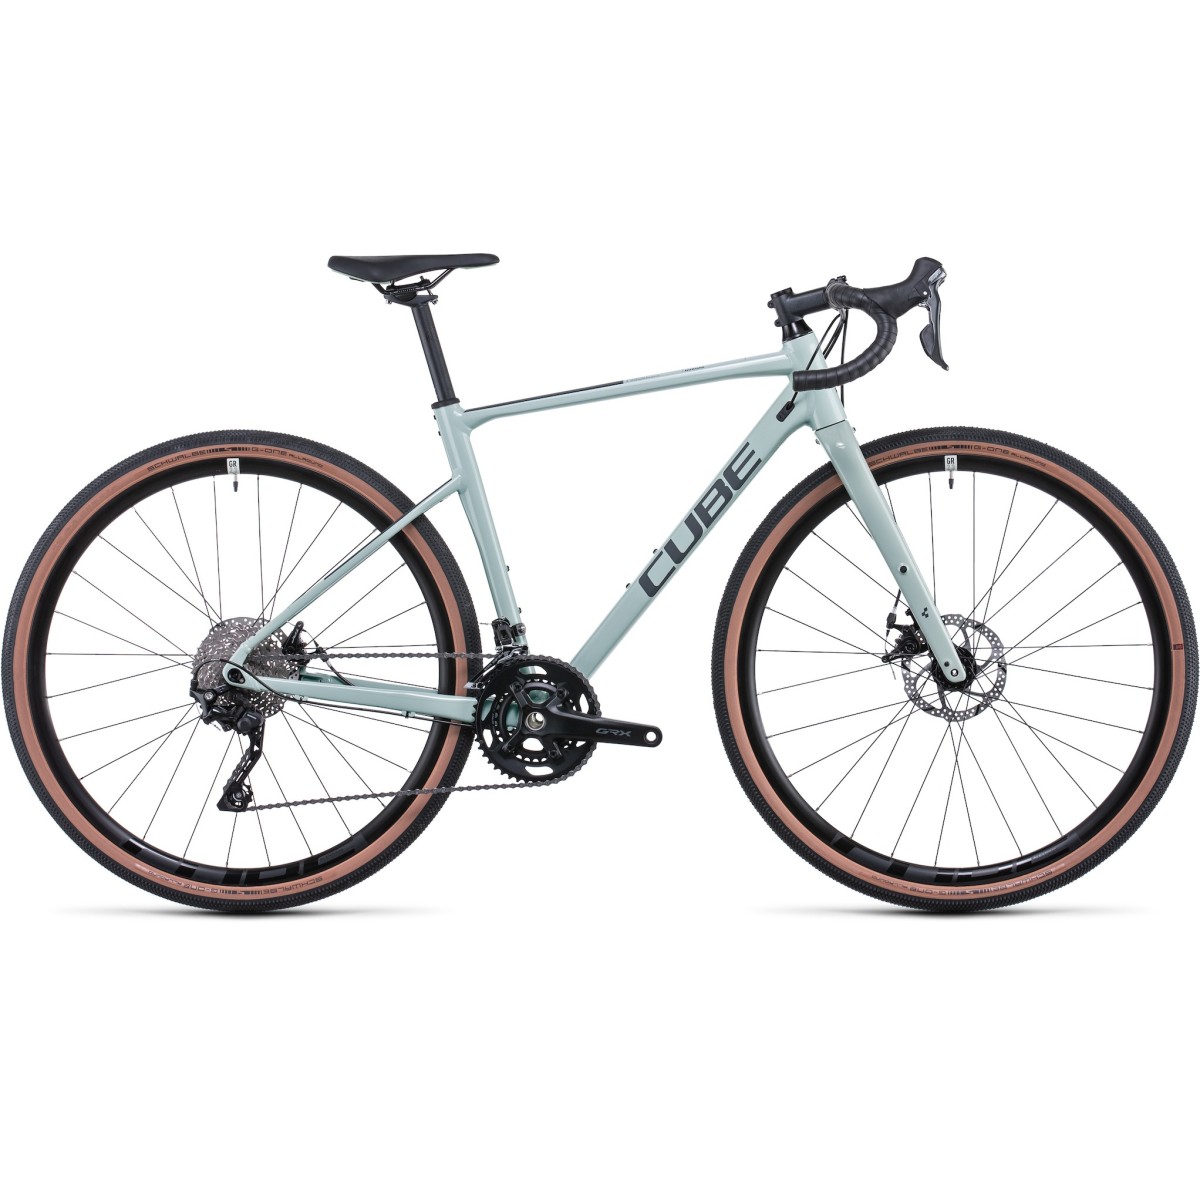 CUBE NUROAD WS gravel bicycle - stonegrey/grey - 2022